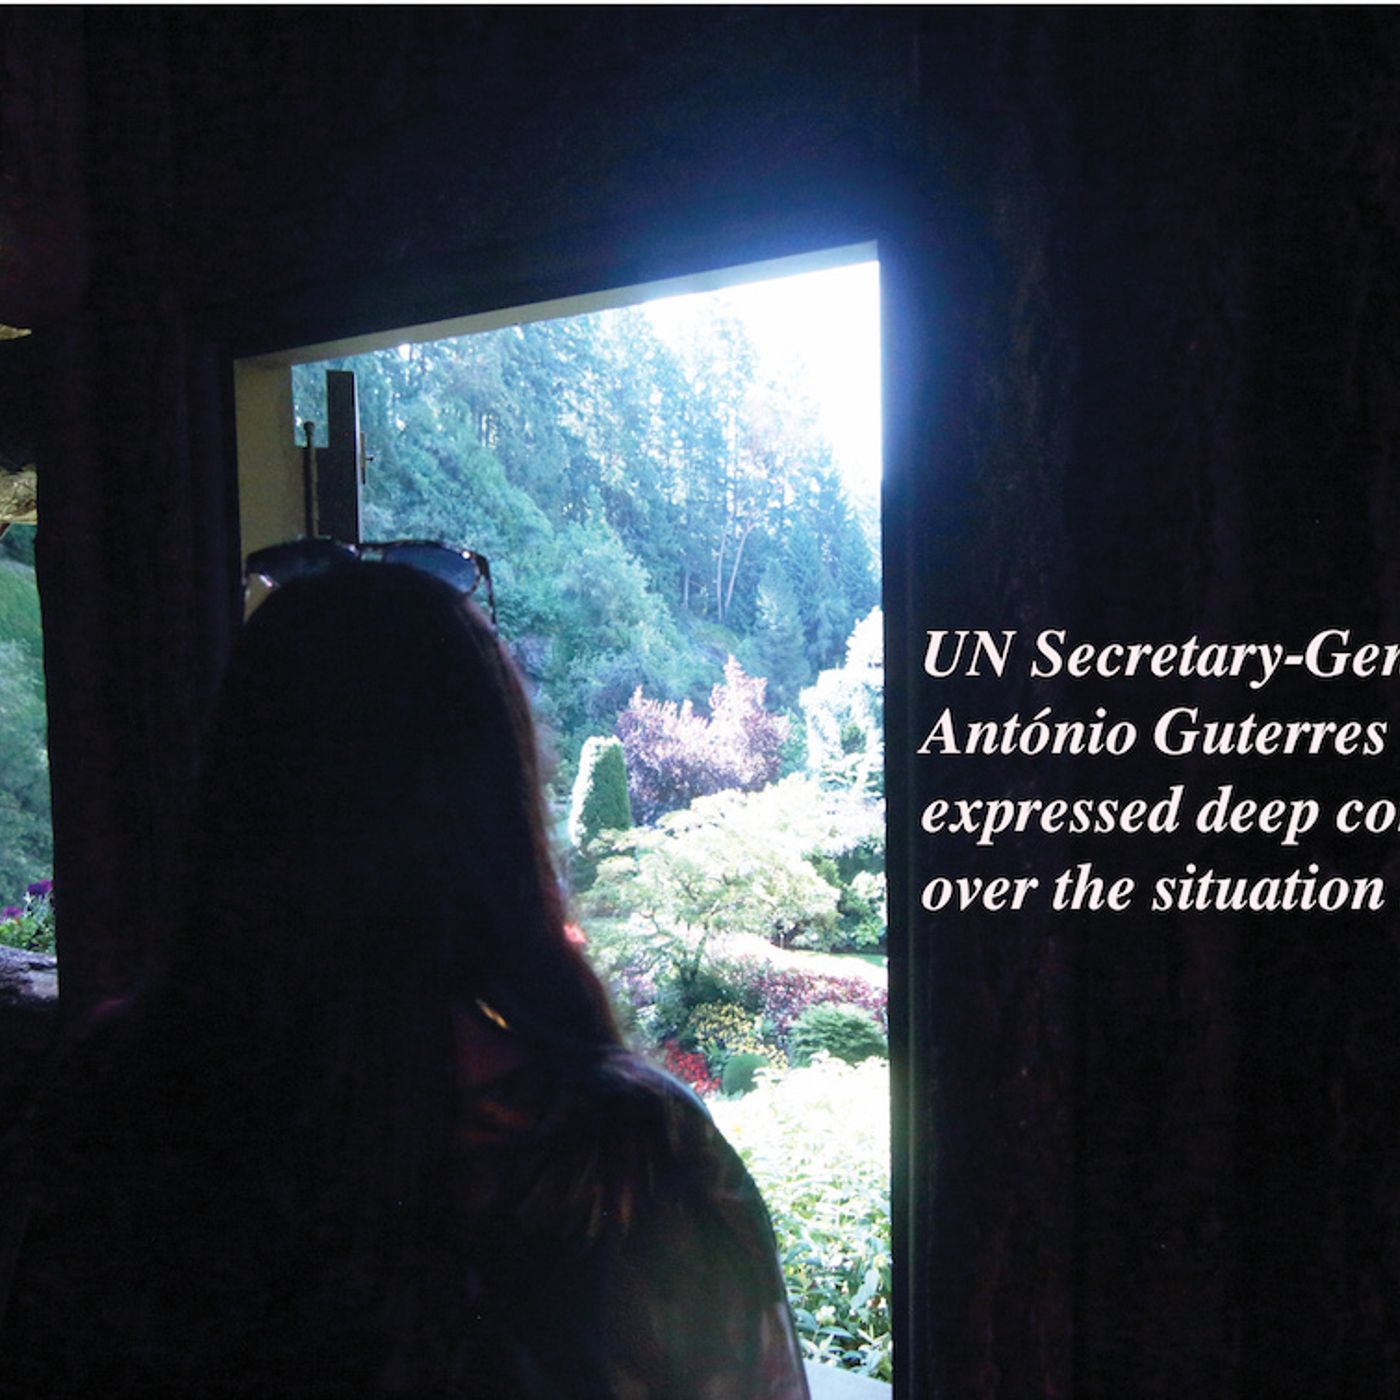 UN Secretary-General António Guterres expressed deep concerns over the situation in Gaza